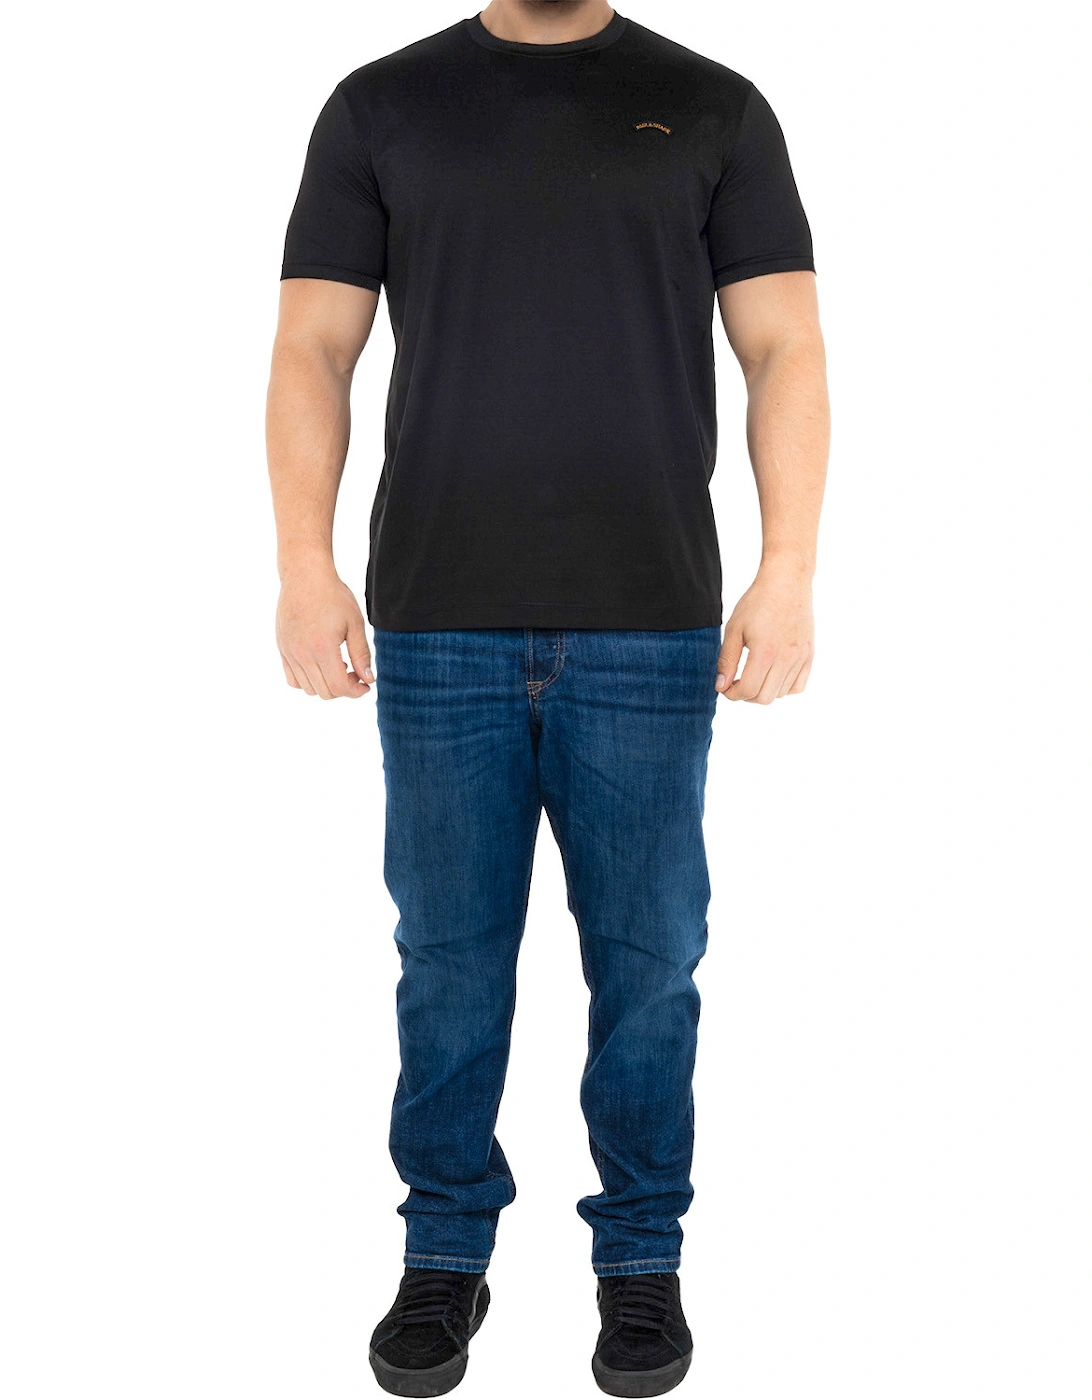 Mens Small Emb Badge T-Shirt (Black)